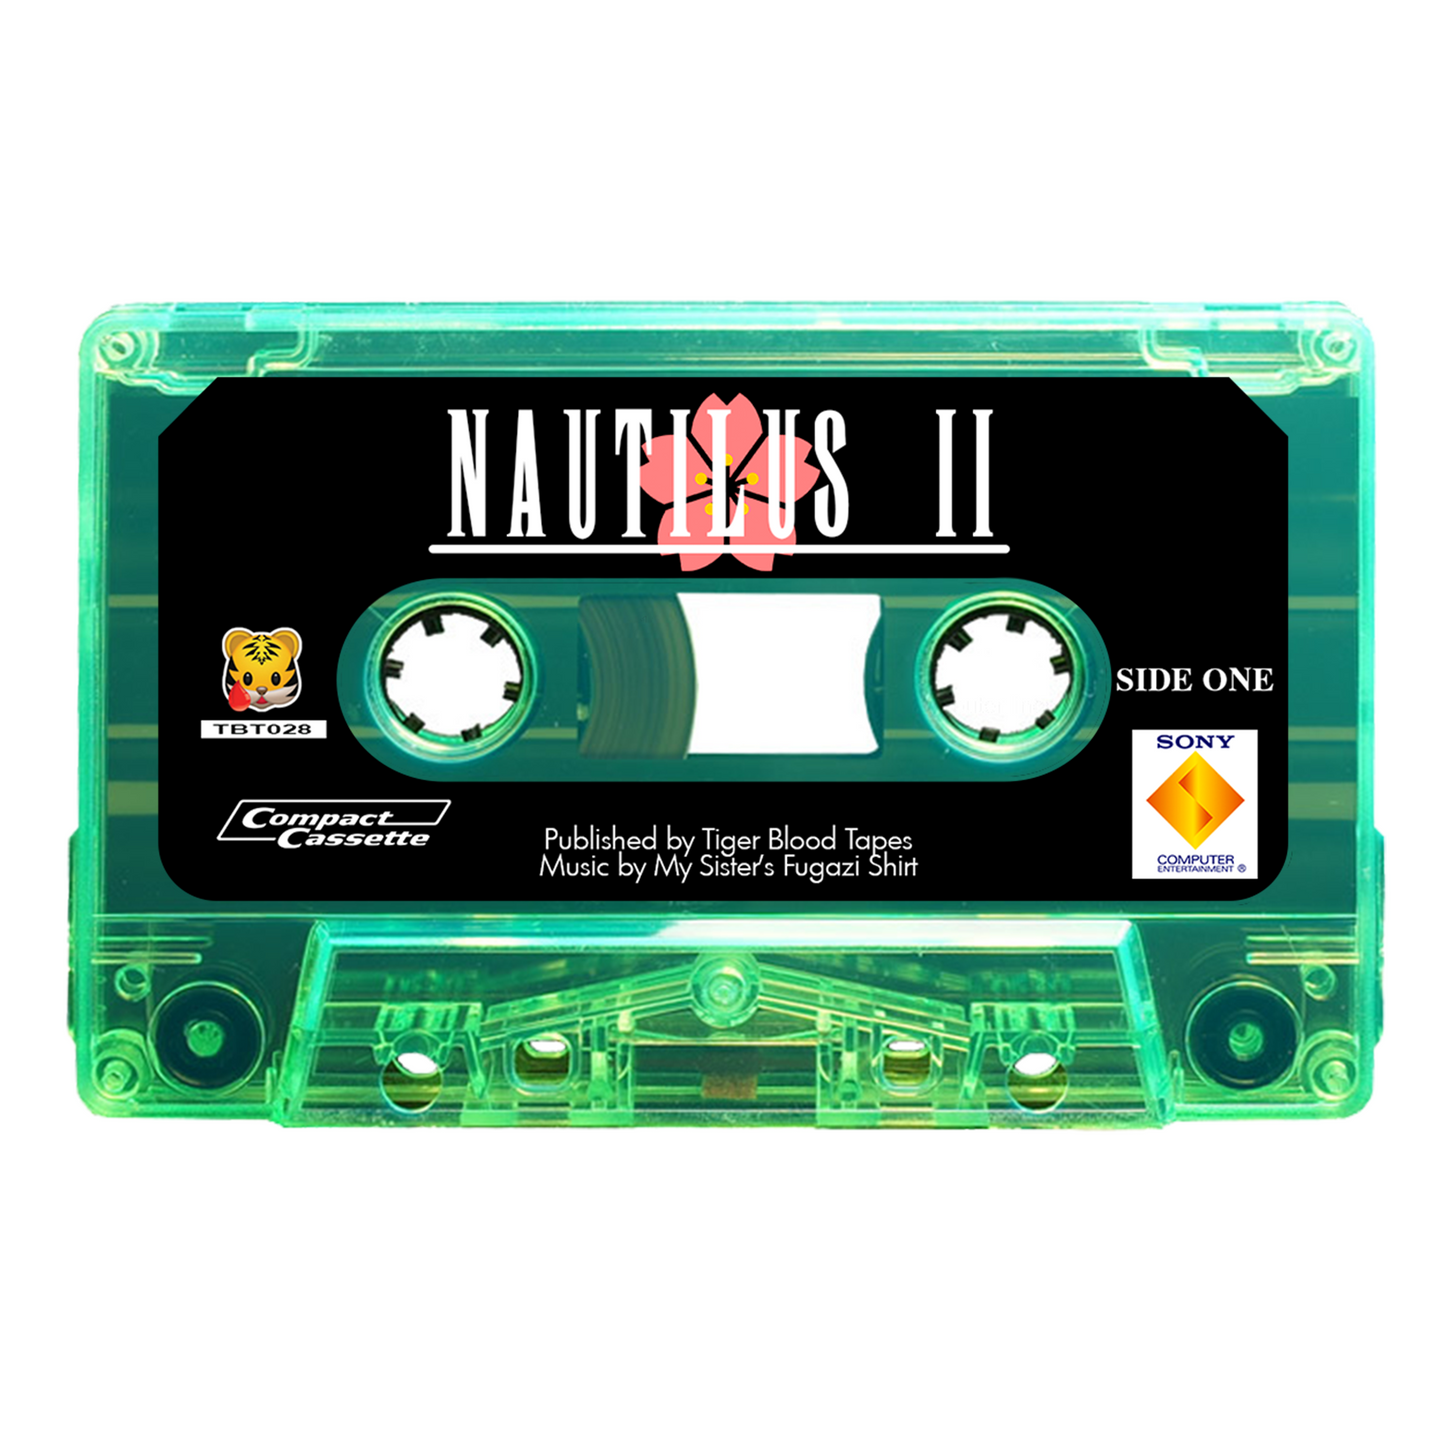 My Sister's Fugazi Shirt - "Nautilus I & II" Limited Edition Cassette Tape Boxset